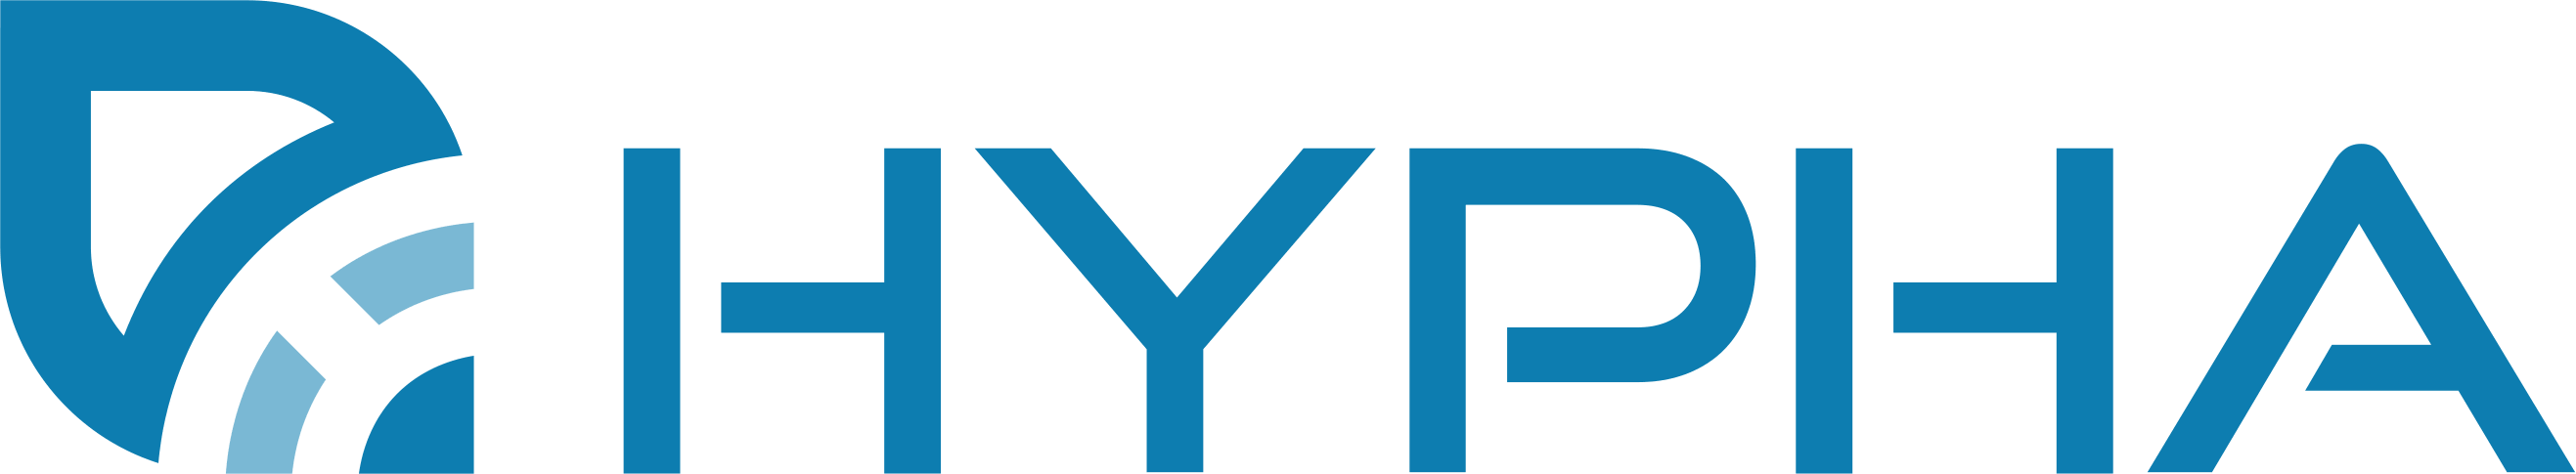 Hypha Logo